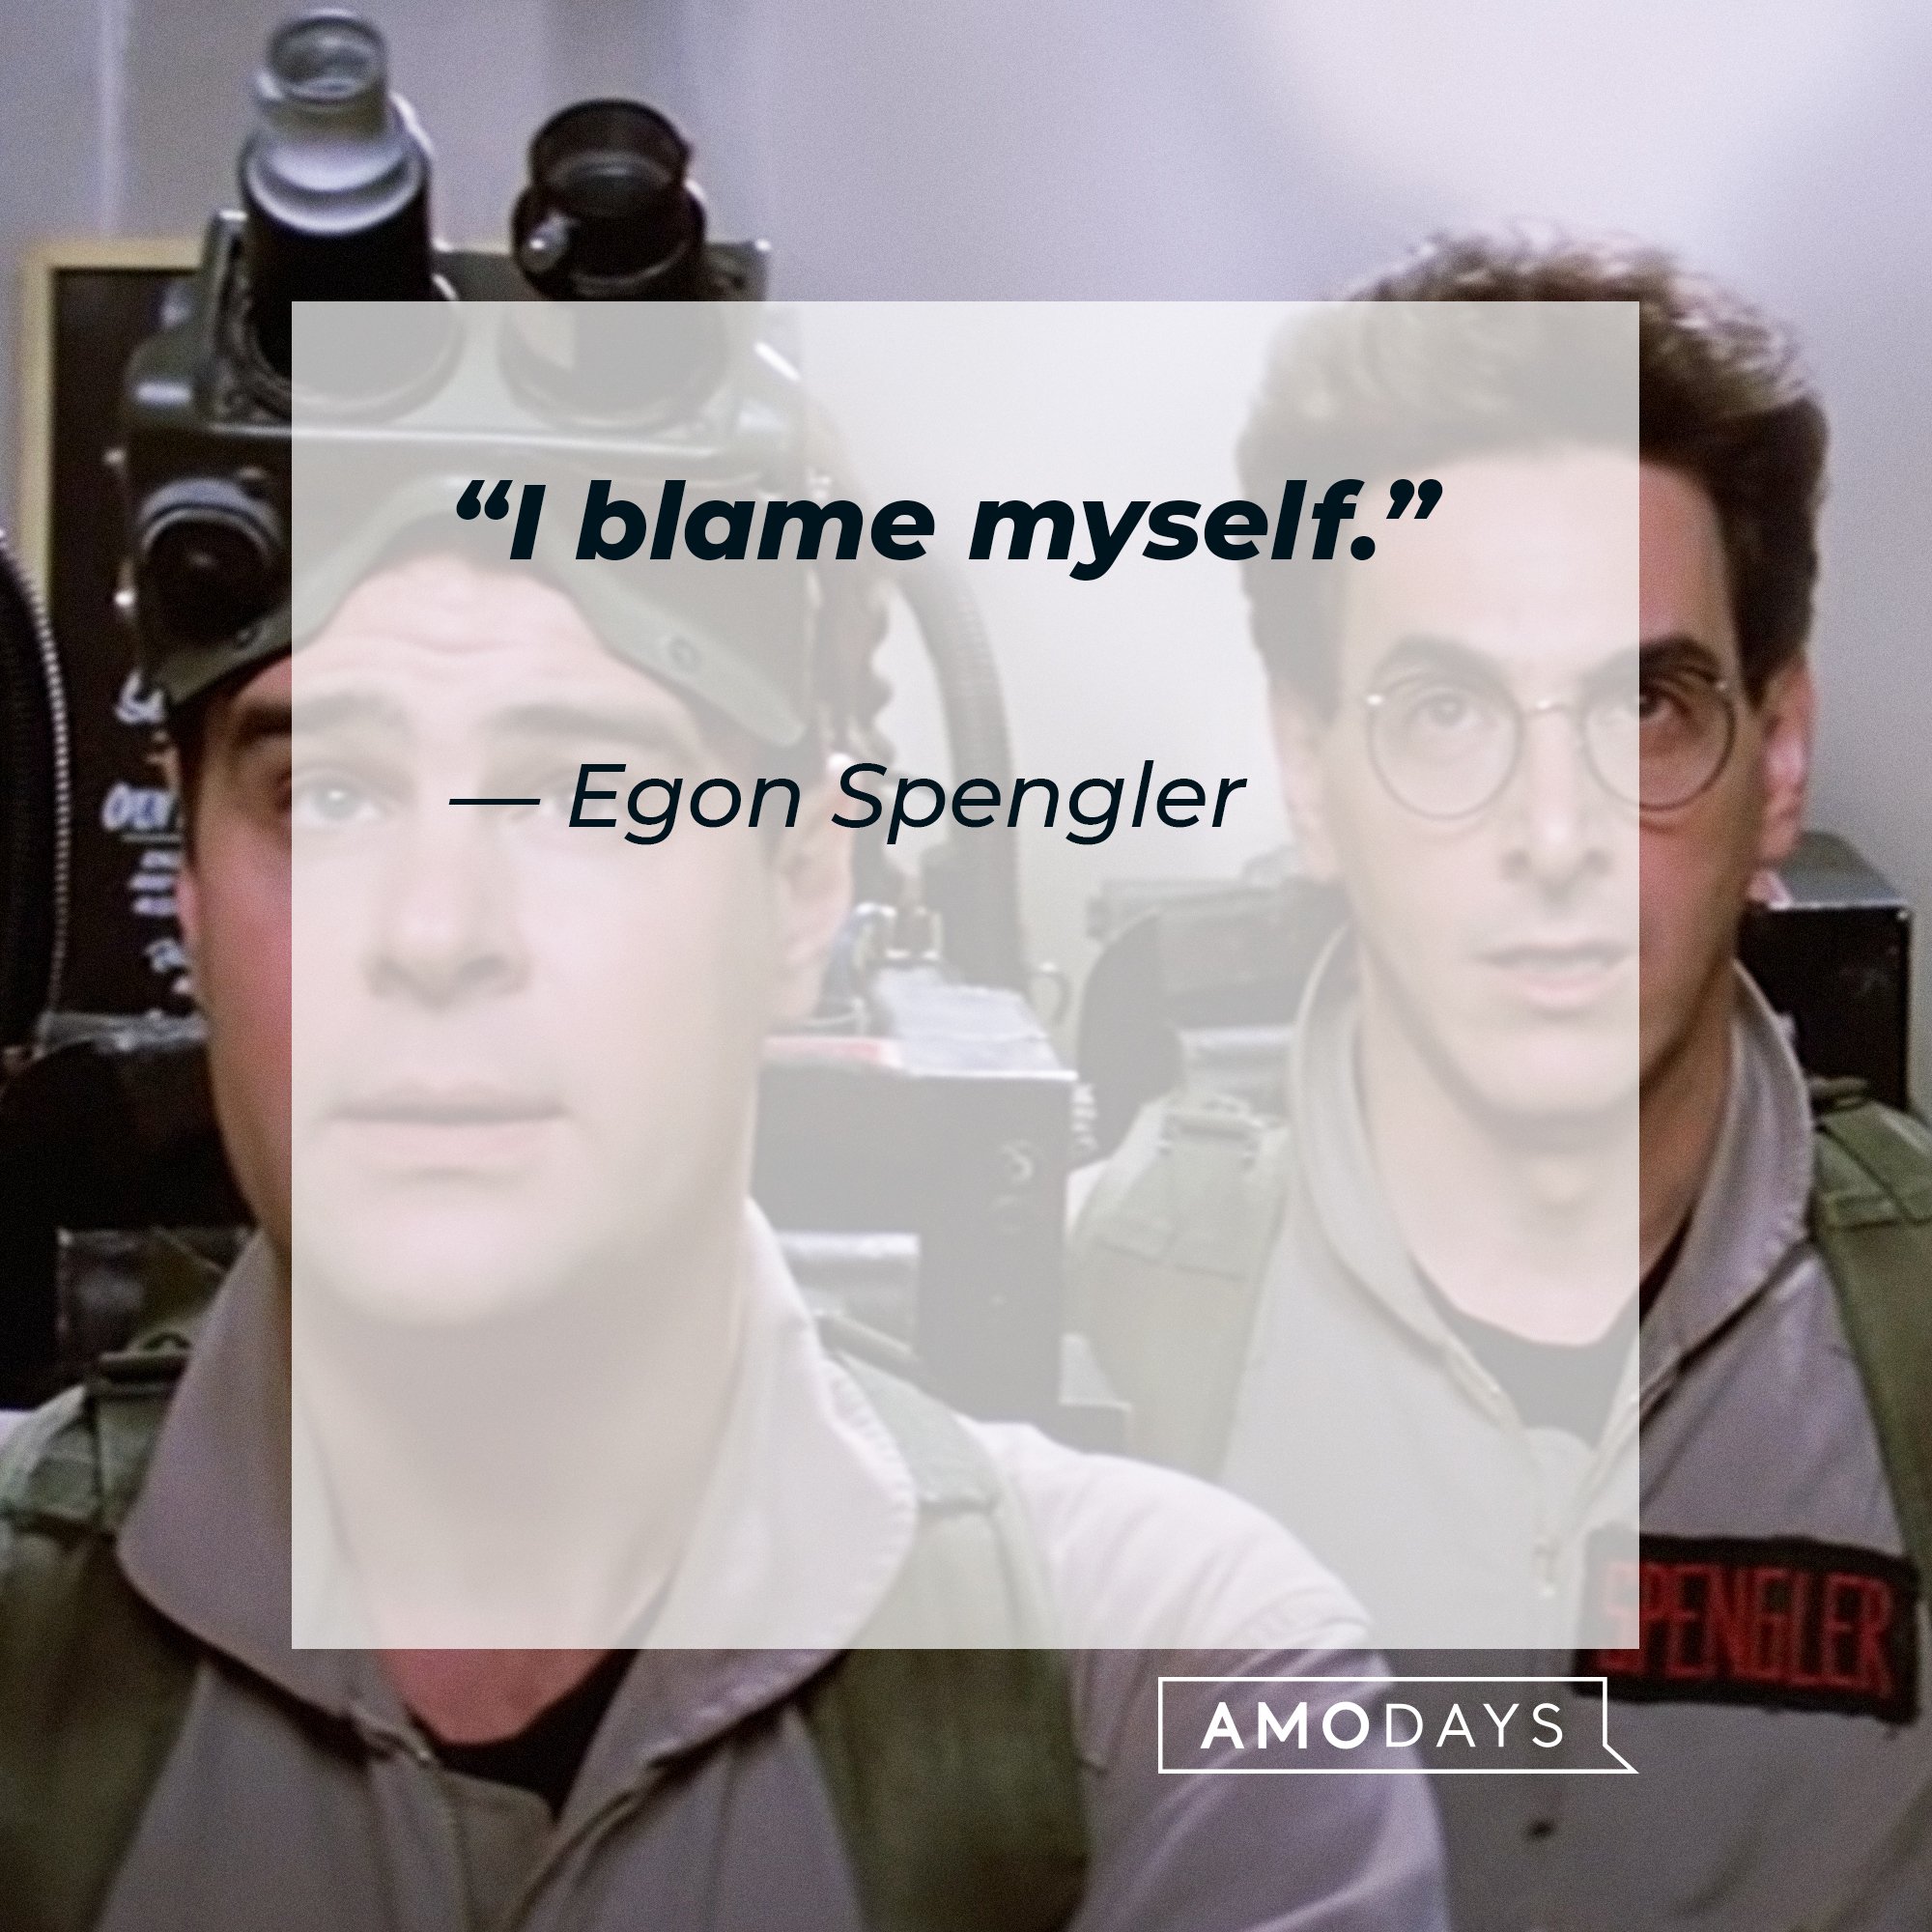 Egon Spengler's quote: “I blame myself.” | Image: AmoDays